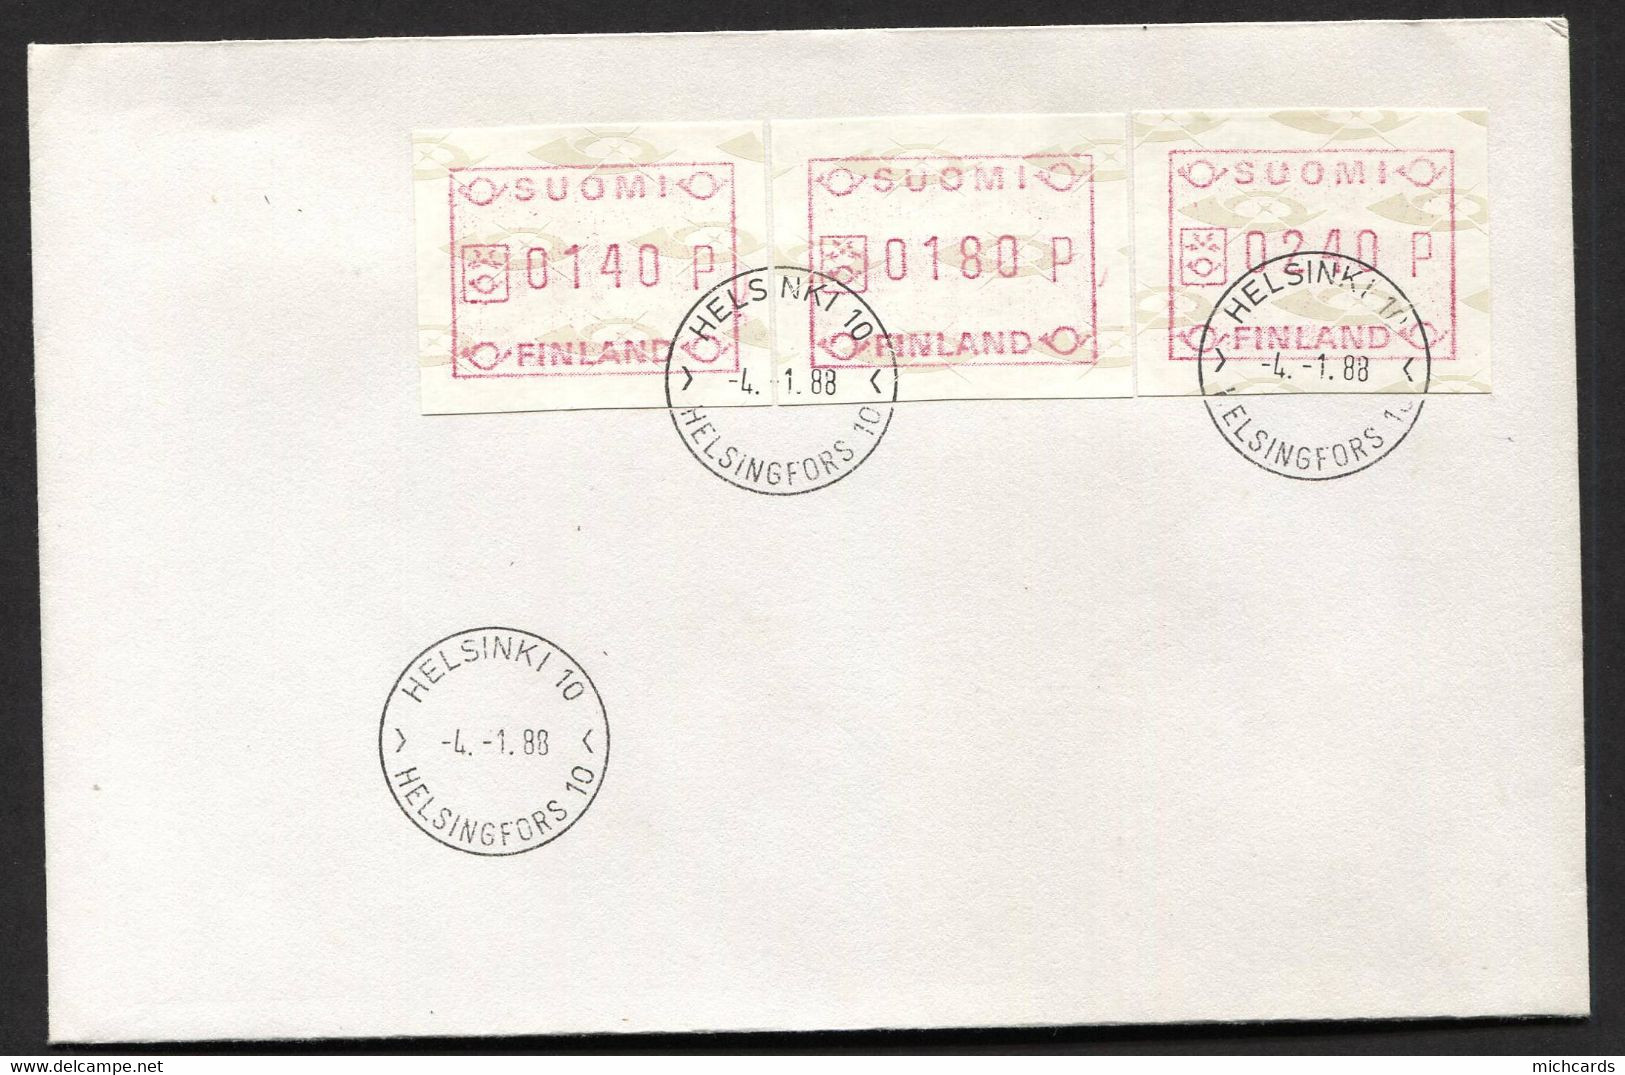 FINLANDE 1988 - Distributeur Sur Enveloppe - Obliteration Helsinki -4.1 88 - Cartas & Documentos